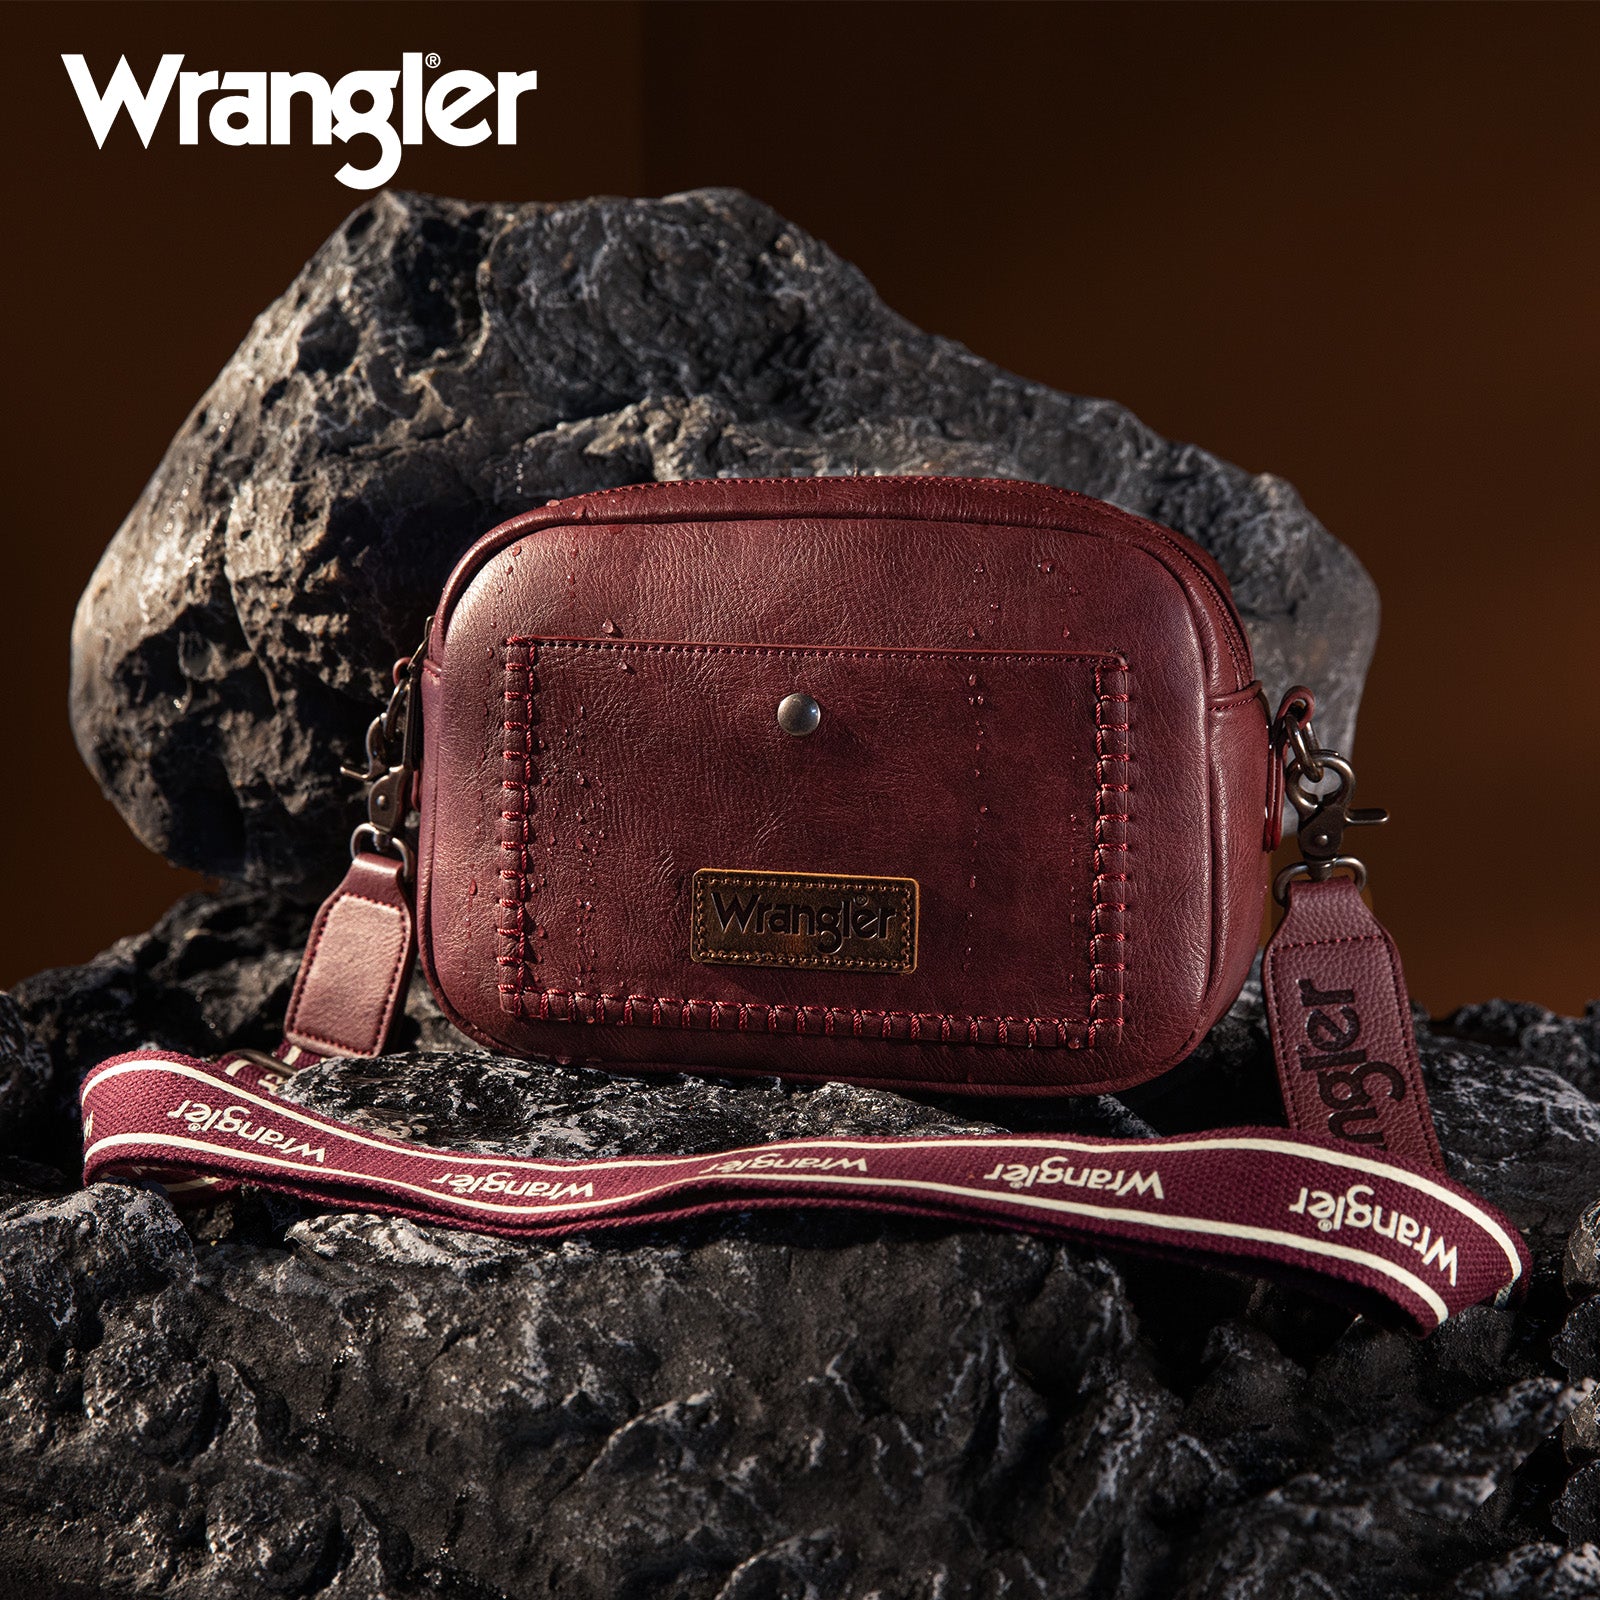 Wrangler Camera Travel Crossbody Bag - Cowgirl Wear